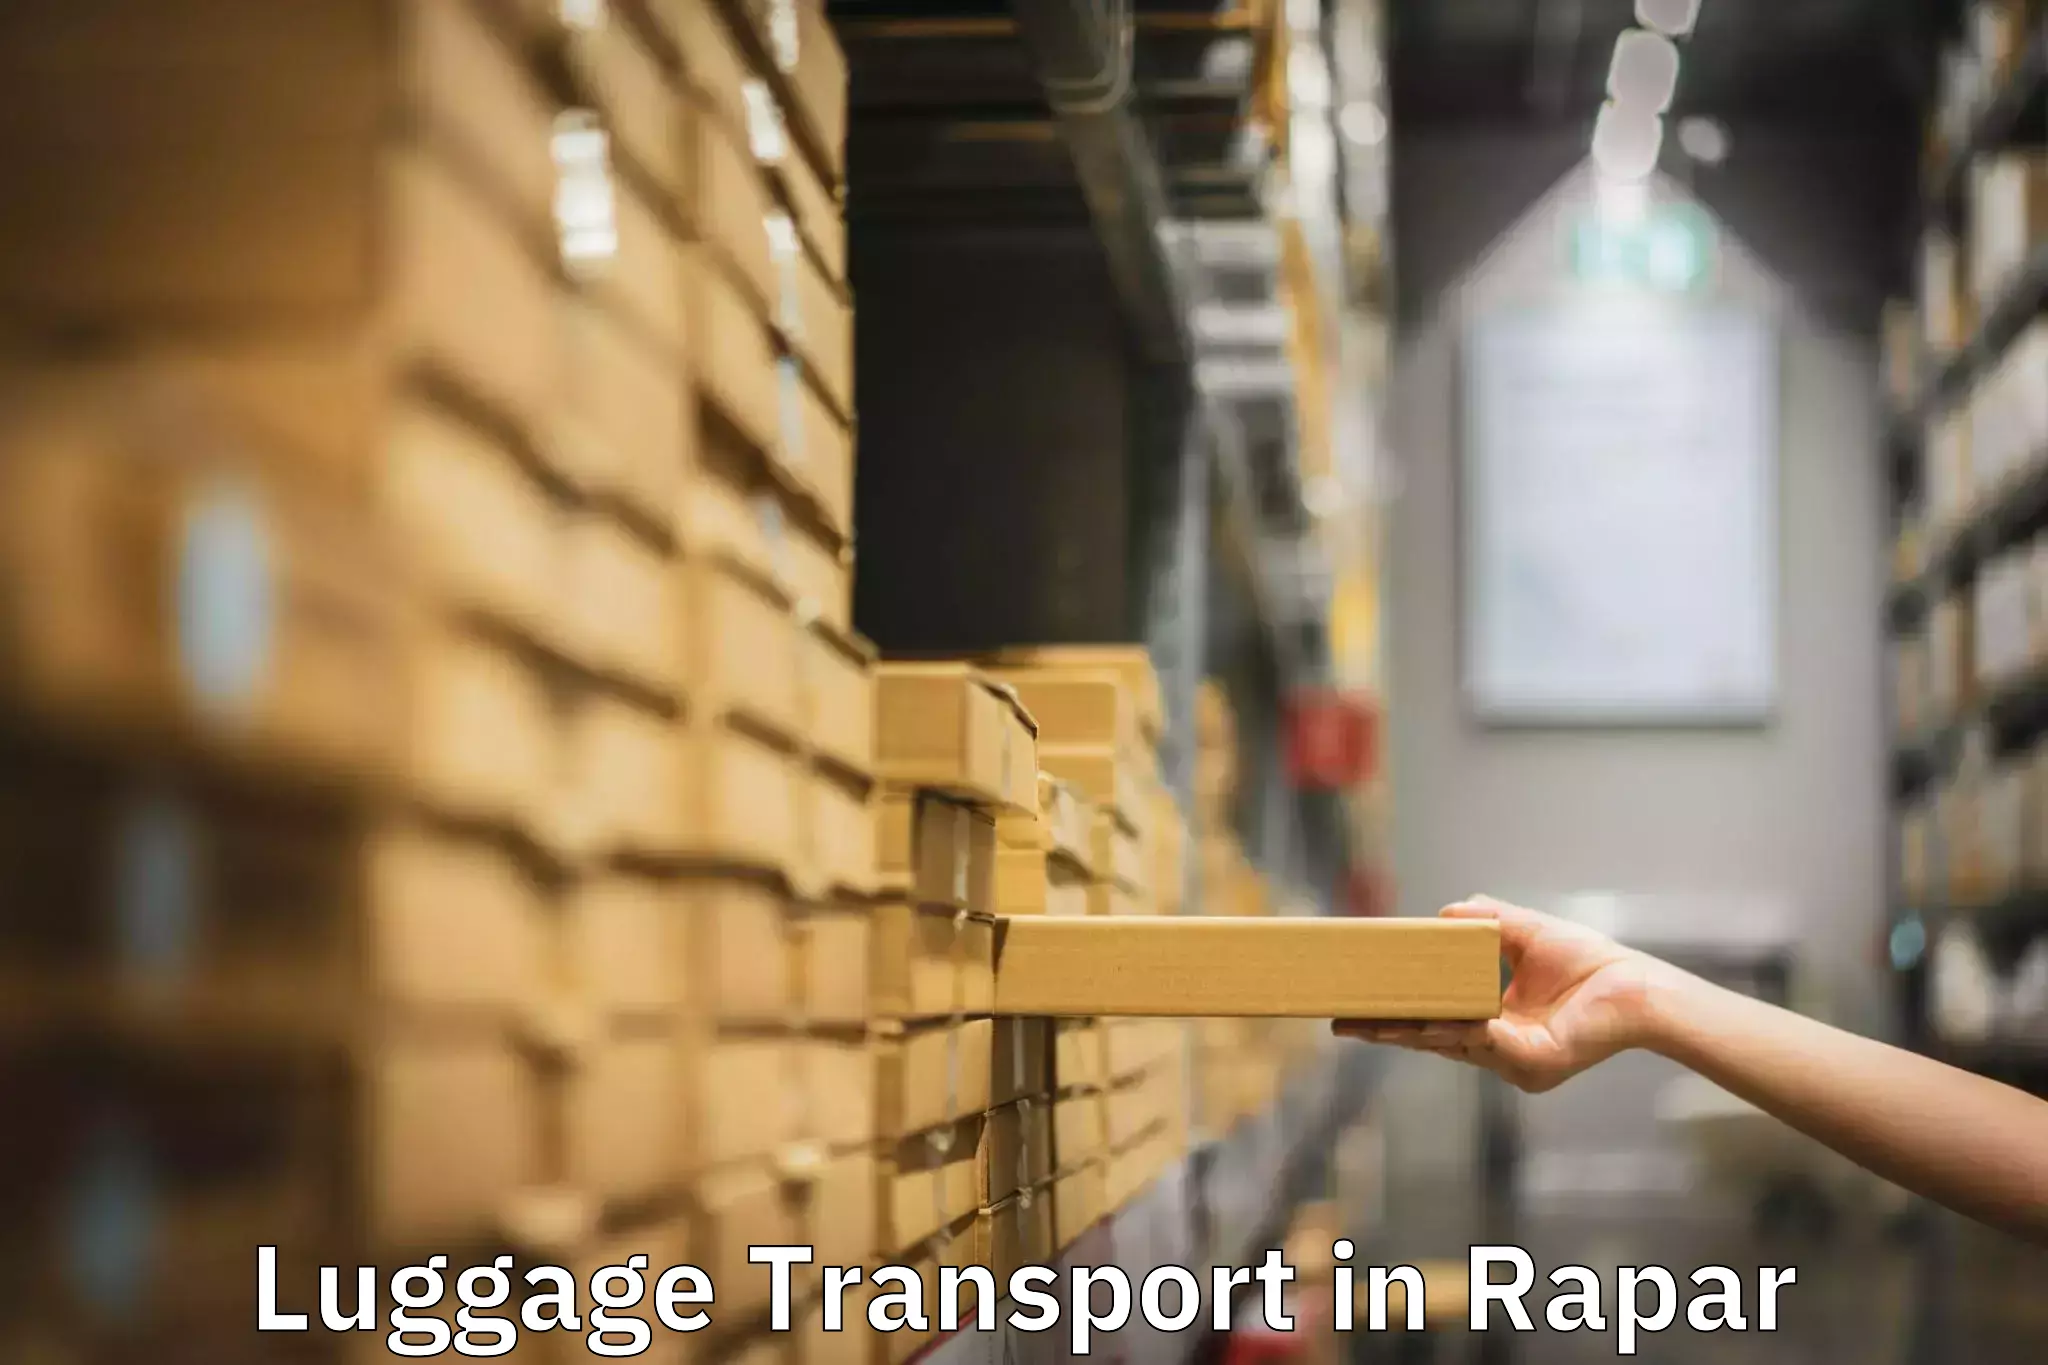 Multi-destination luggage transport in Rapar